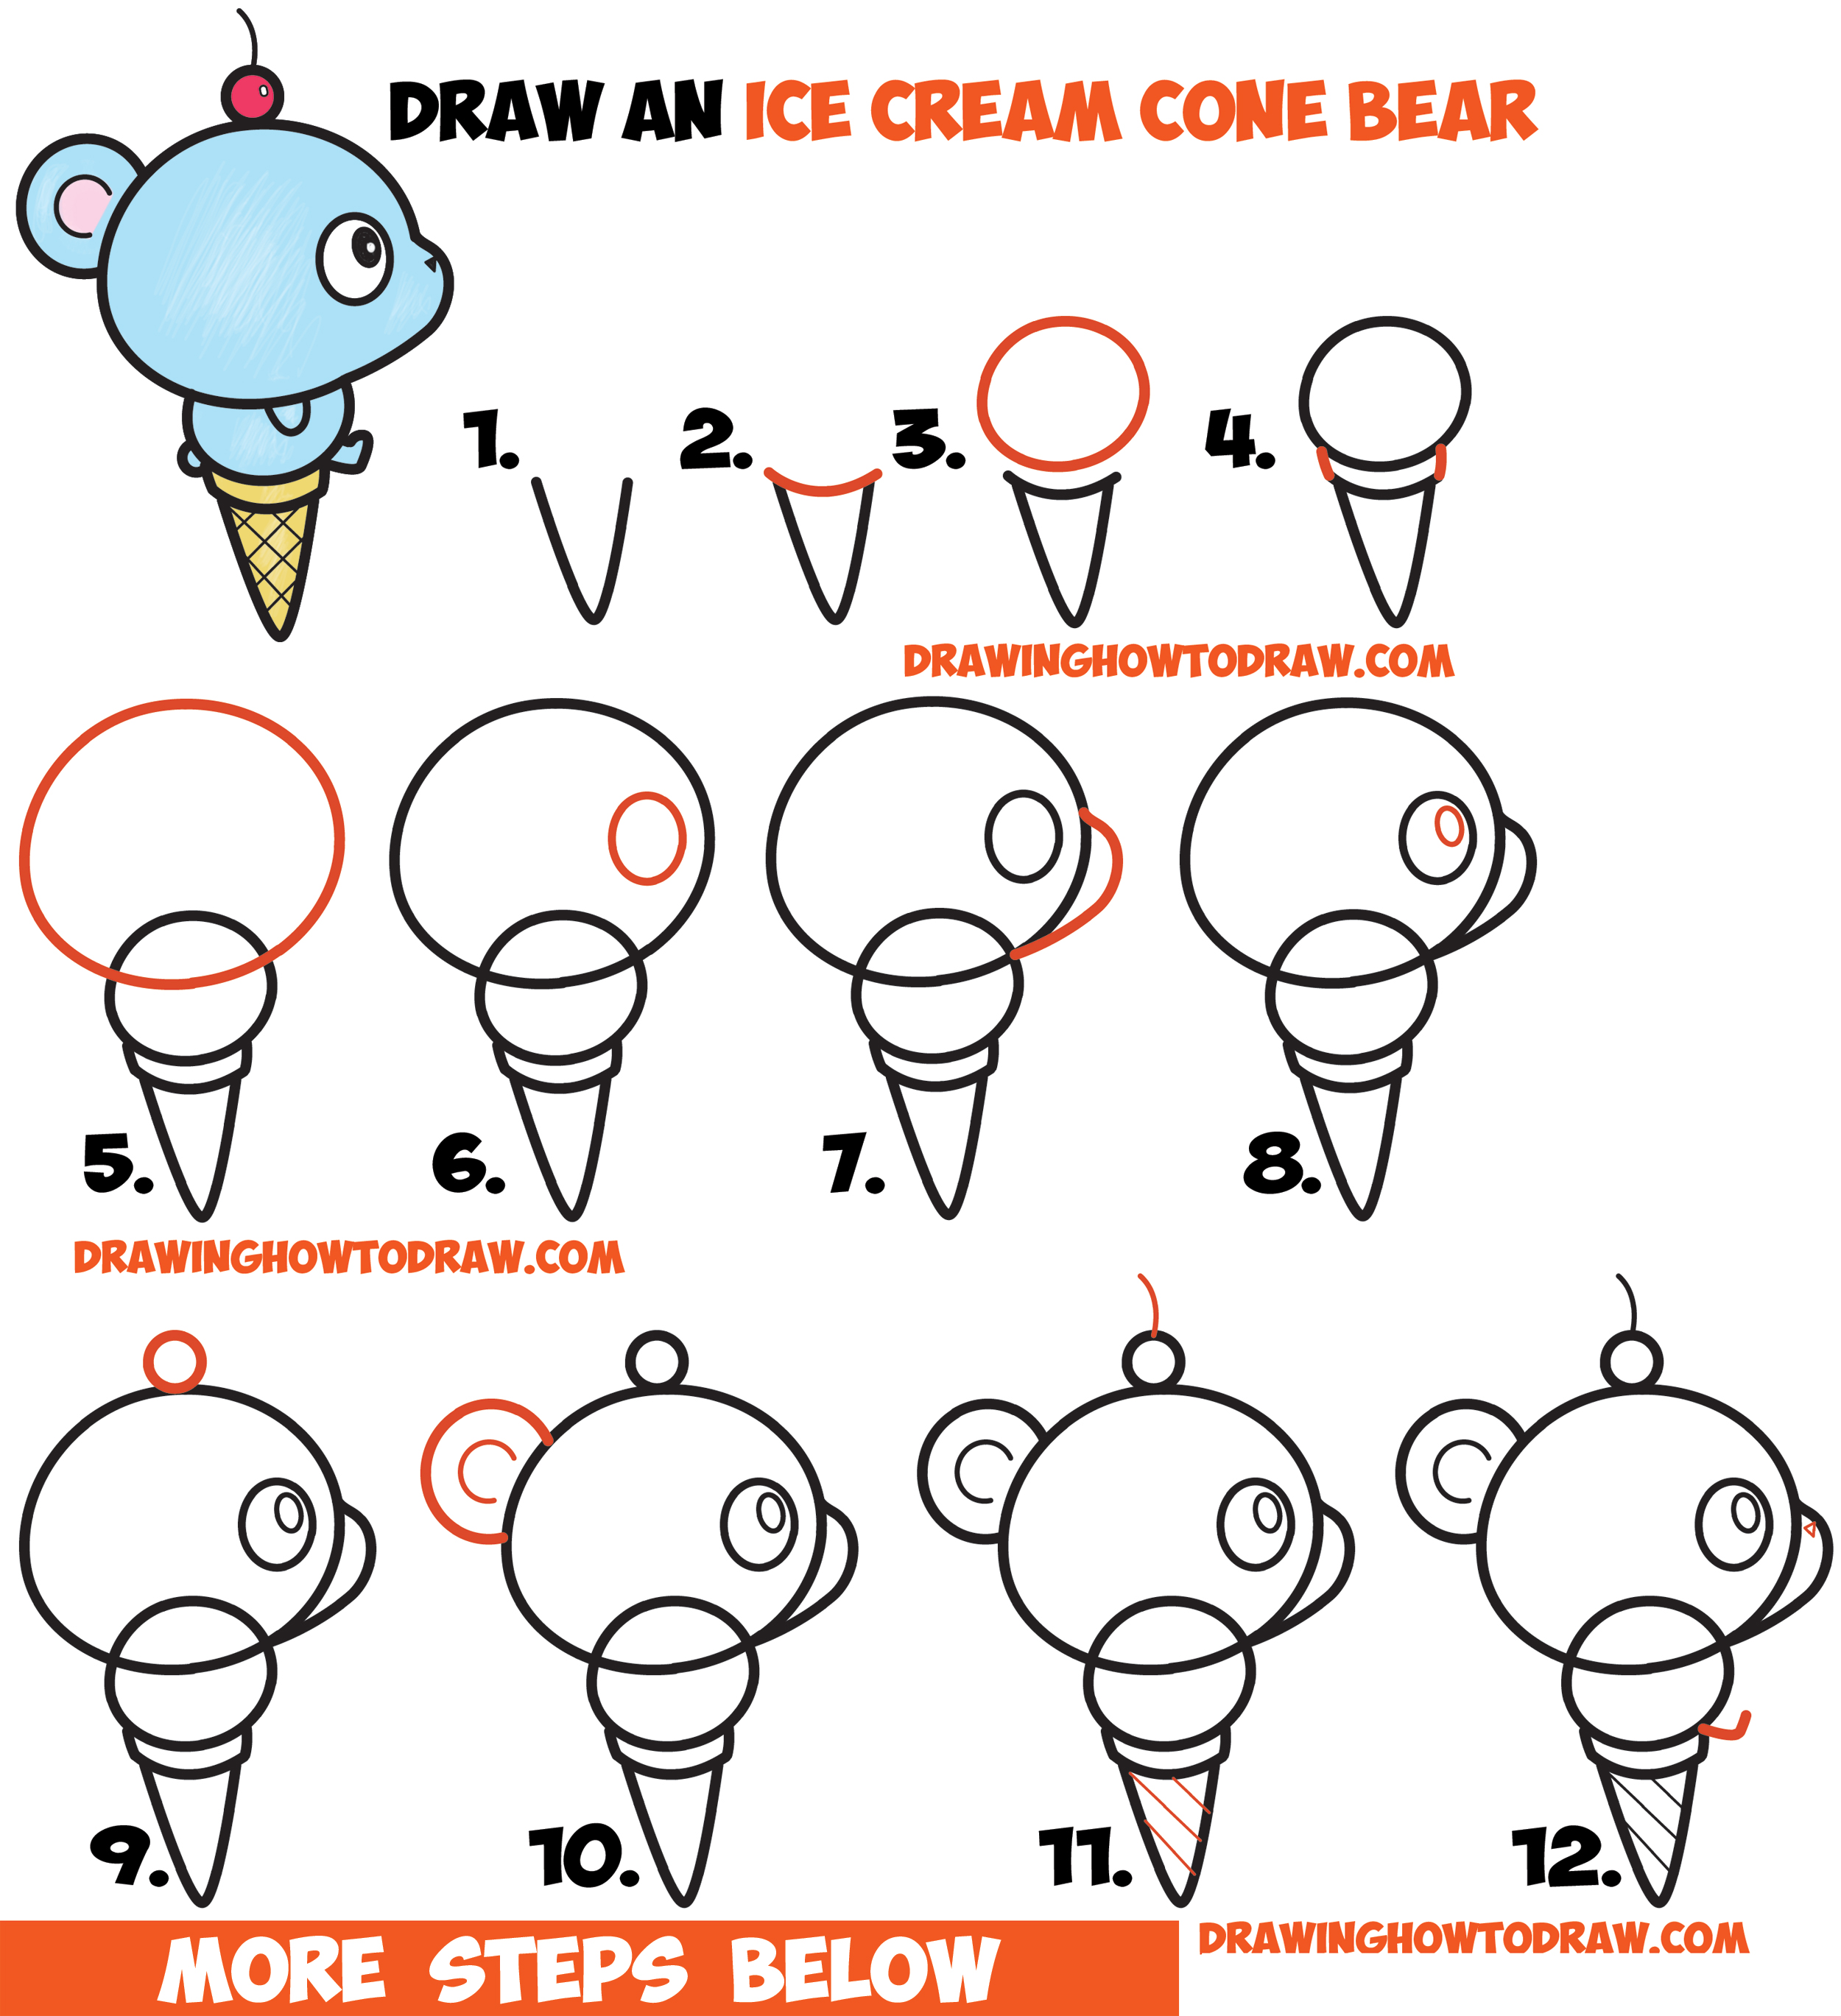 How To Draw Super Cute Cartoon Kawaii Bear On Ice Cream Cone Easy Step By Step Drawing Tutorial For Kids Beginners How To Draw Step By Step Drawing Tutorials